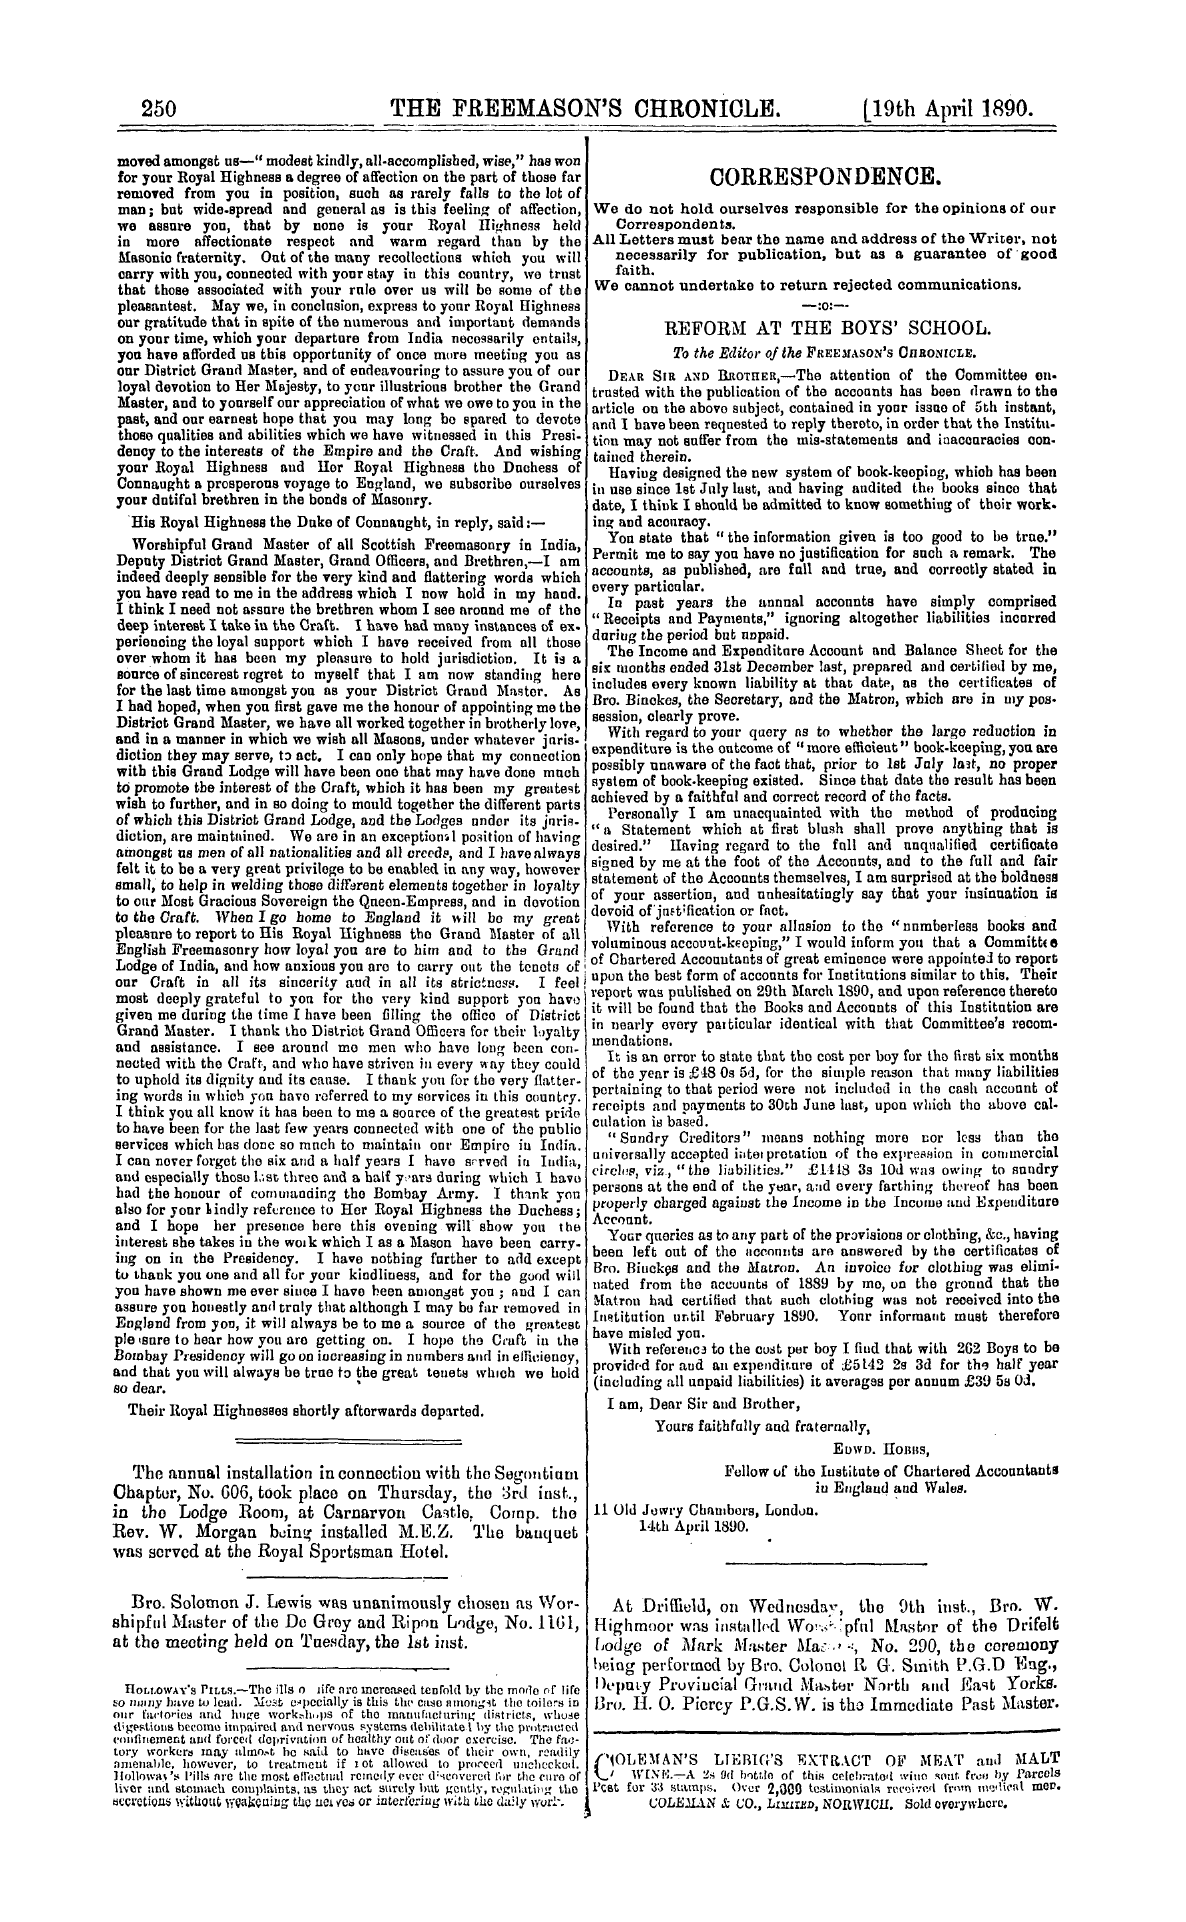 The Freemason's Chronicle: 1890-04-19 - Correspondence.